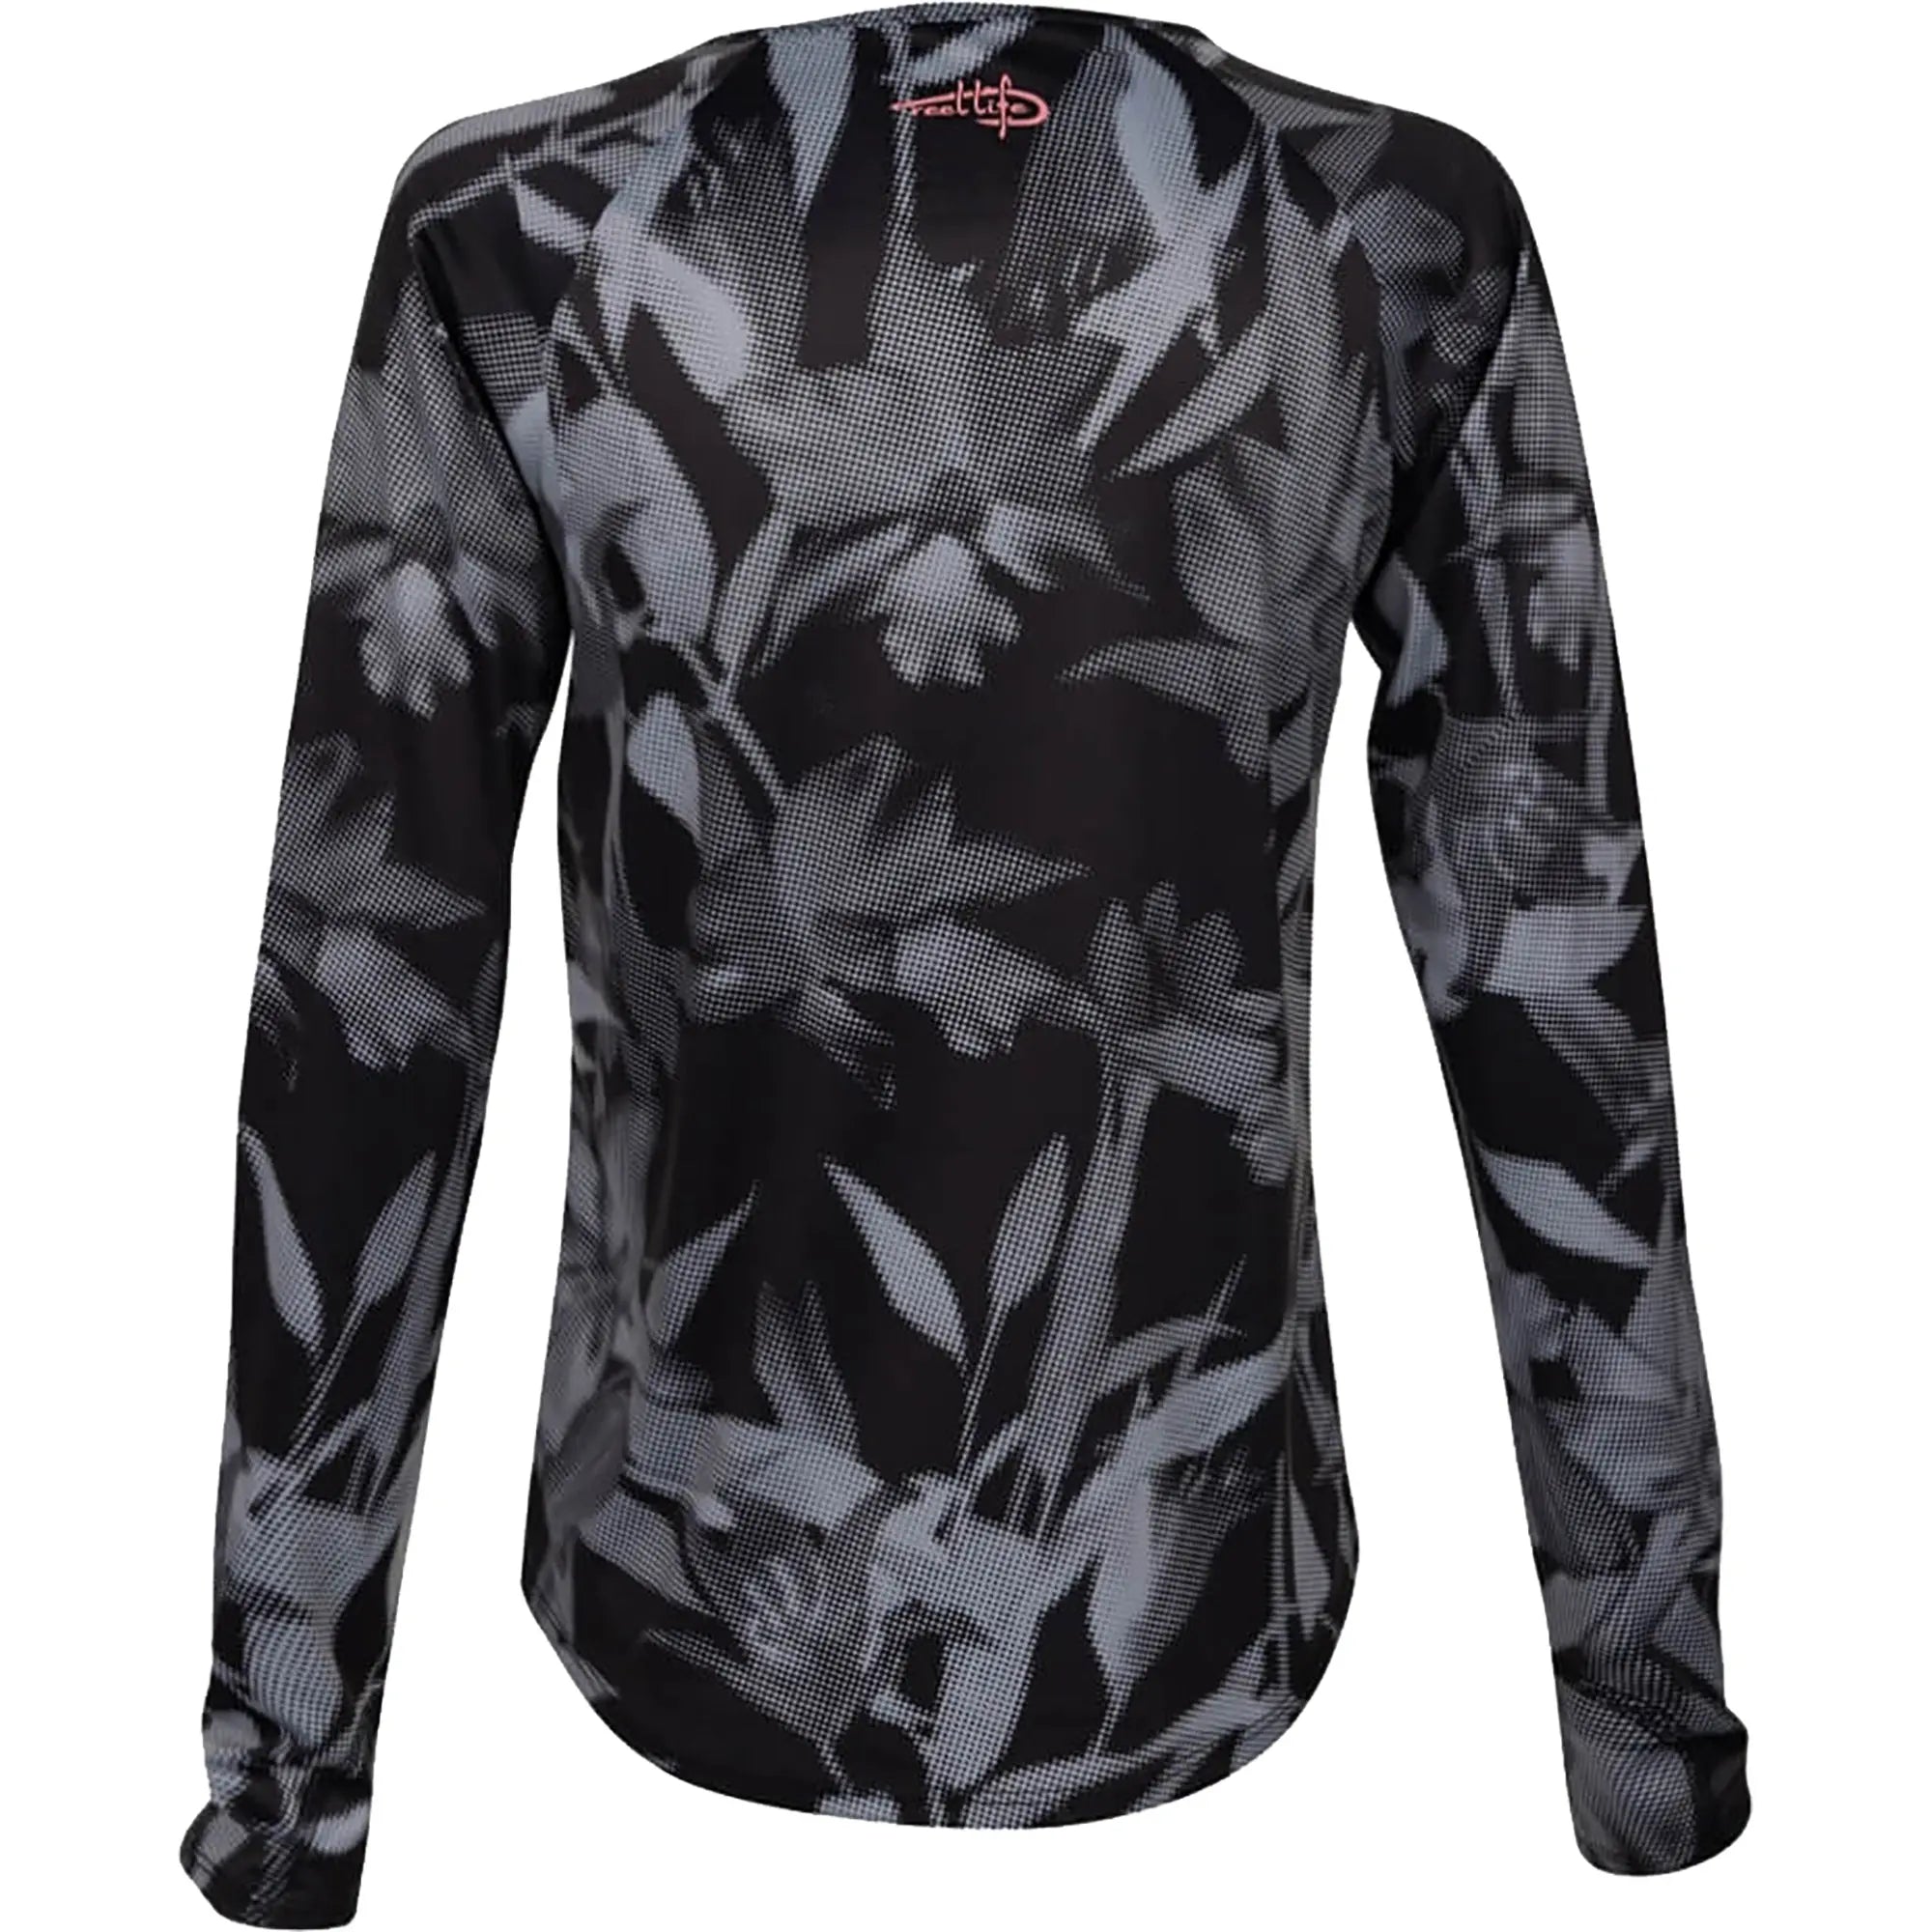 Reel Life 3 Lines Tarpon UV Long Sleeve Performance T-Shirt - Blooming –  Forza Sports